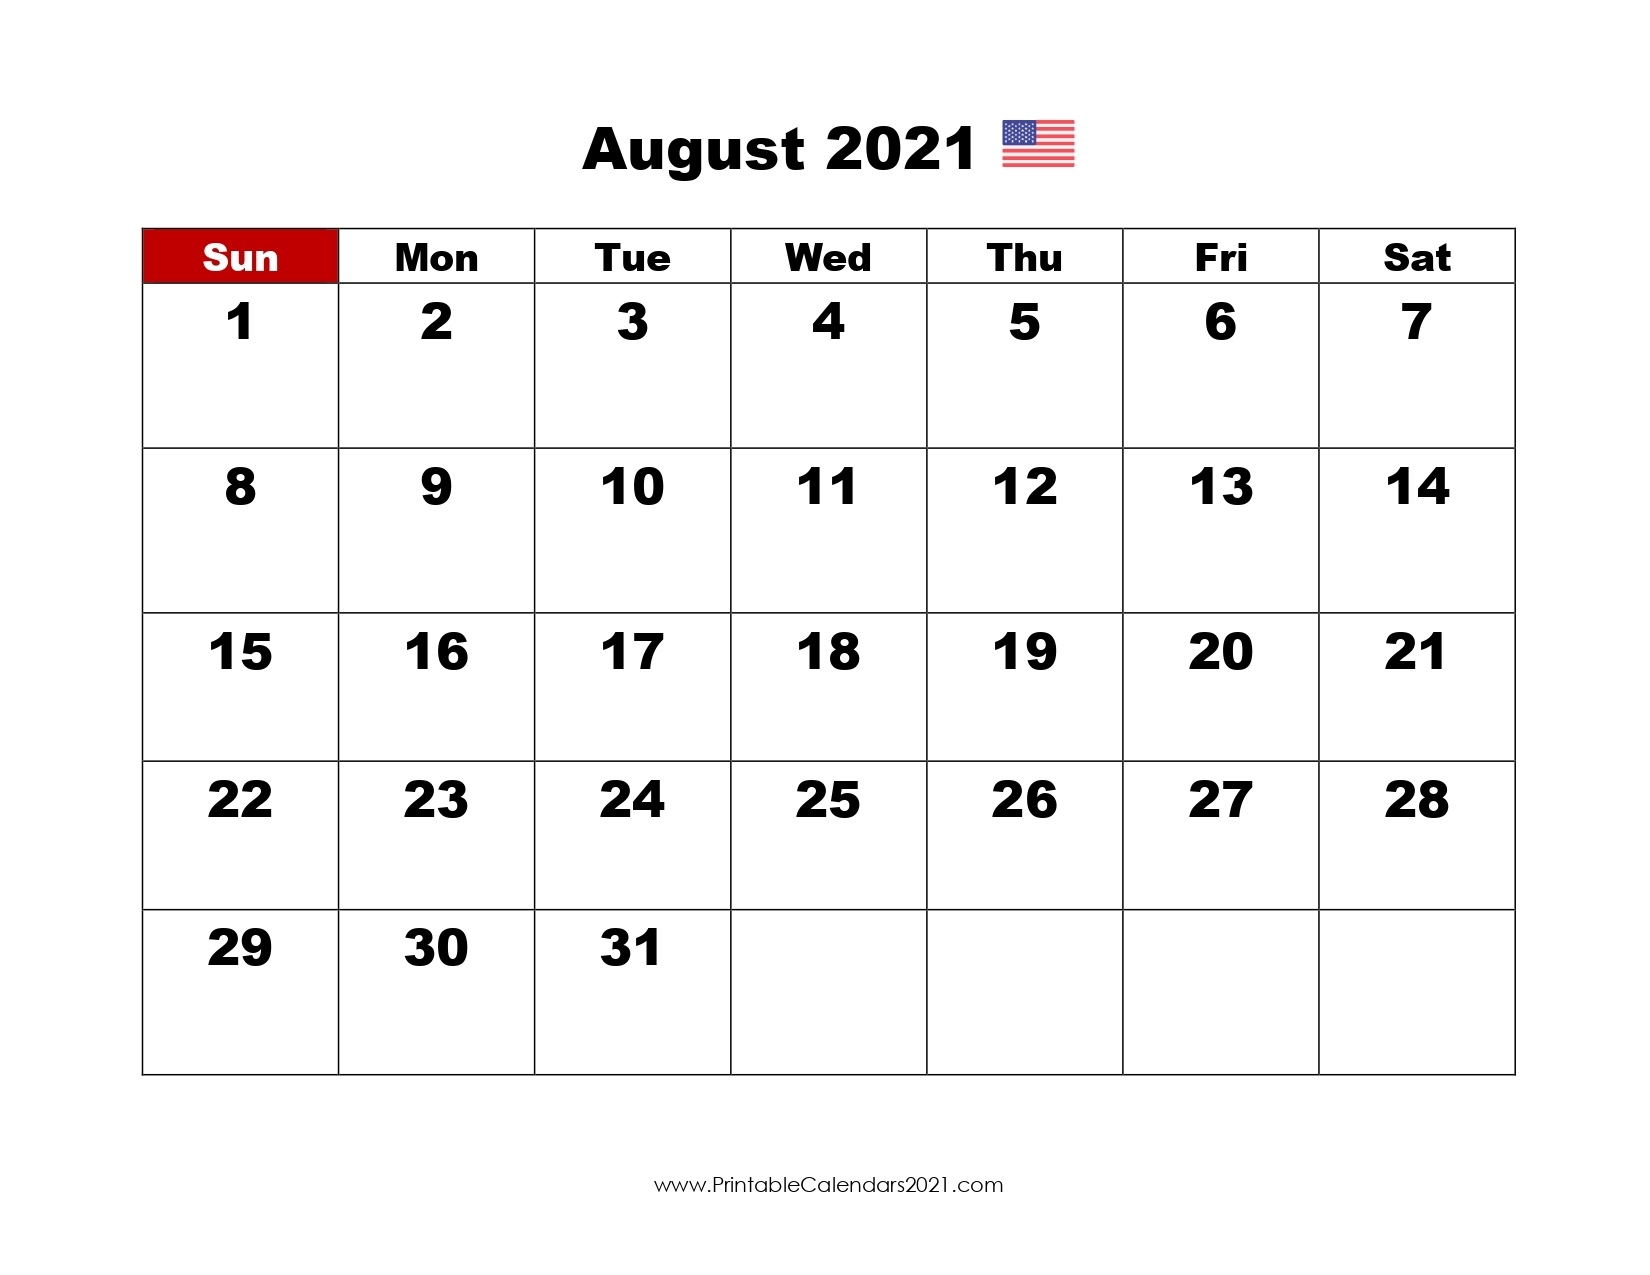 44+ August 2021 Calendar Printable, August 2021 Blank Calendar Pdf August 2021 Calendar Hindi